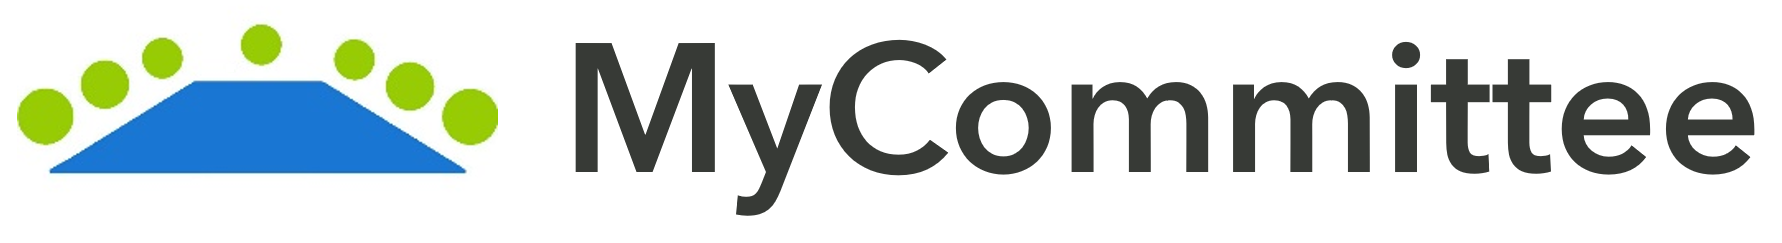 MyCommittee.com